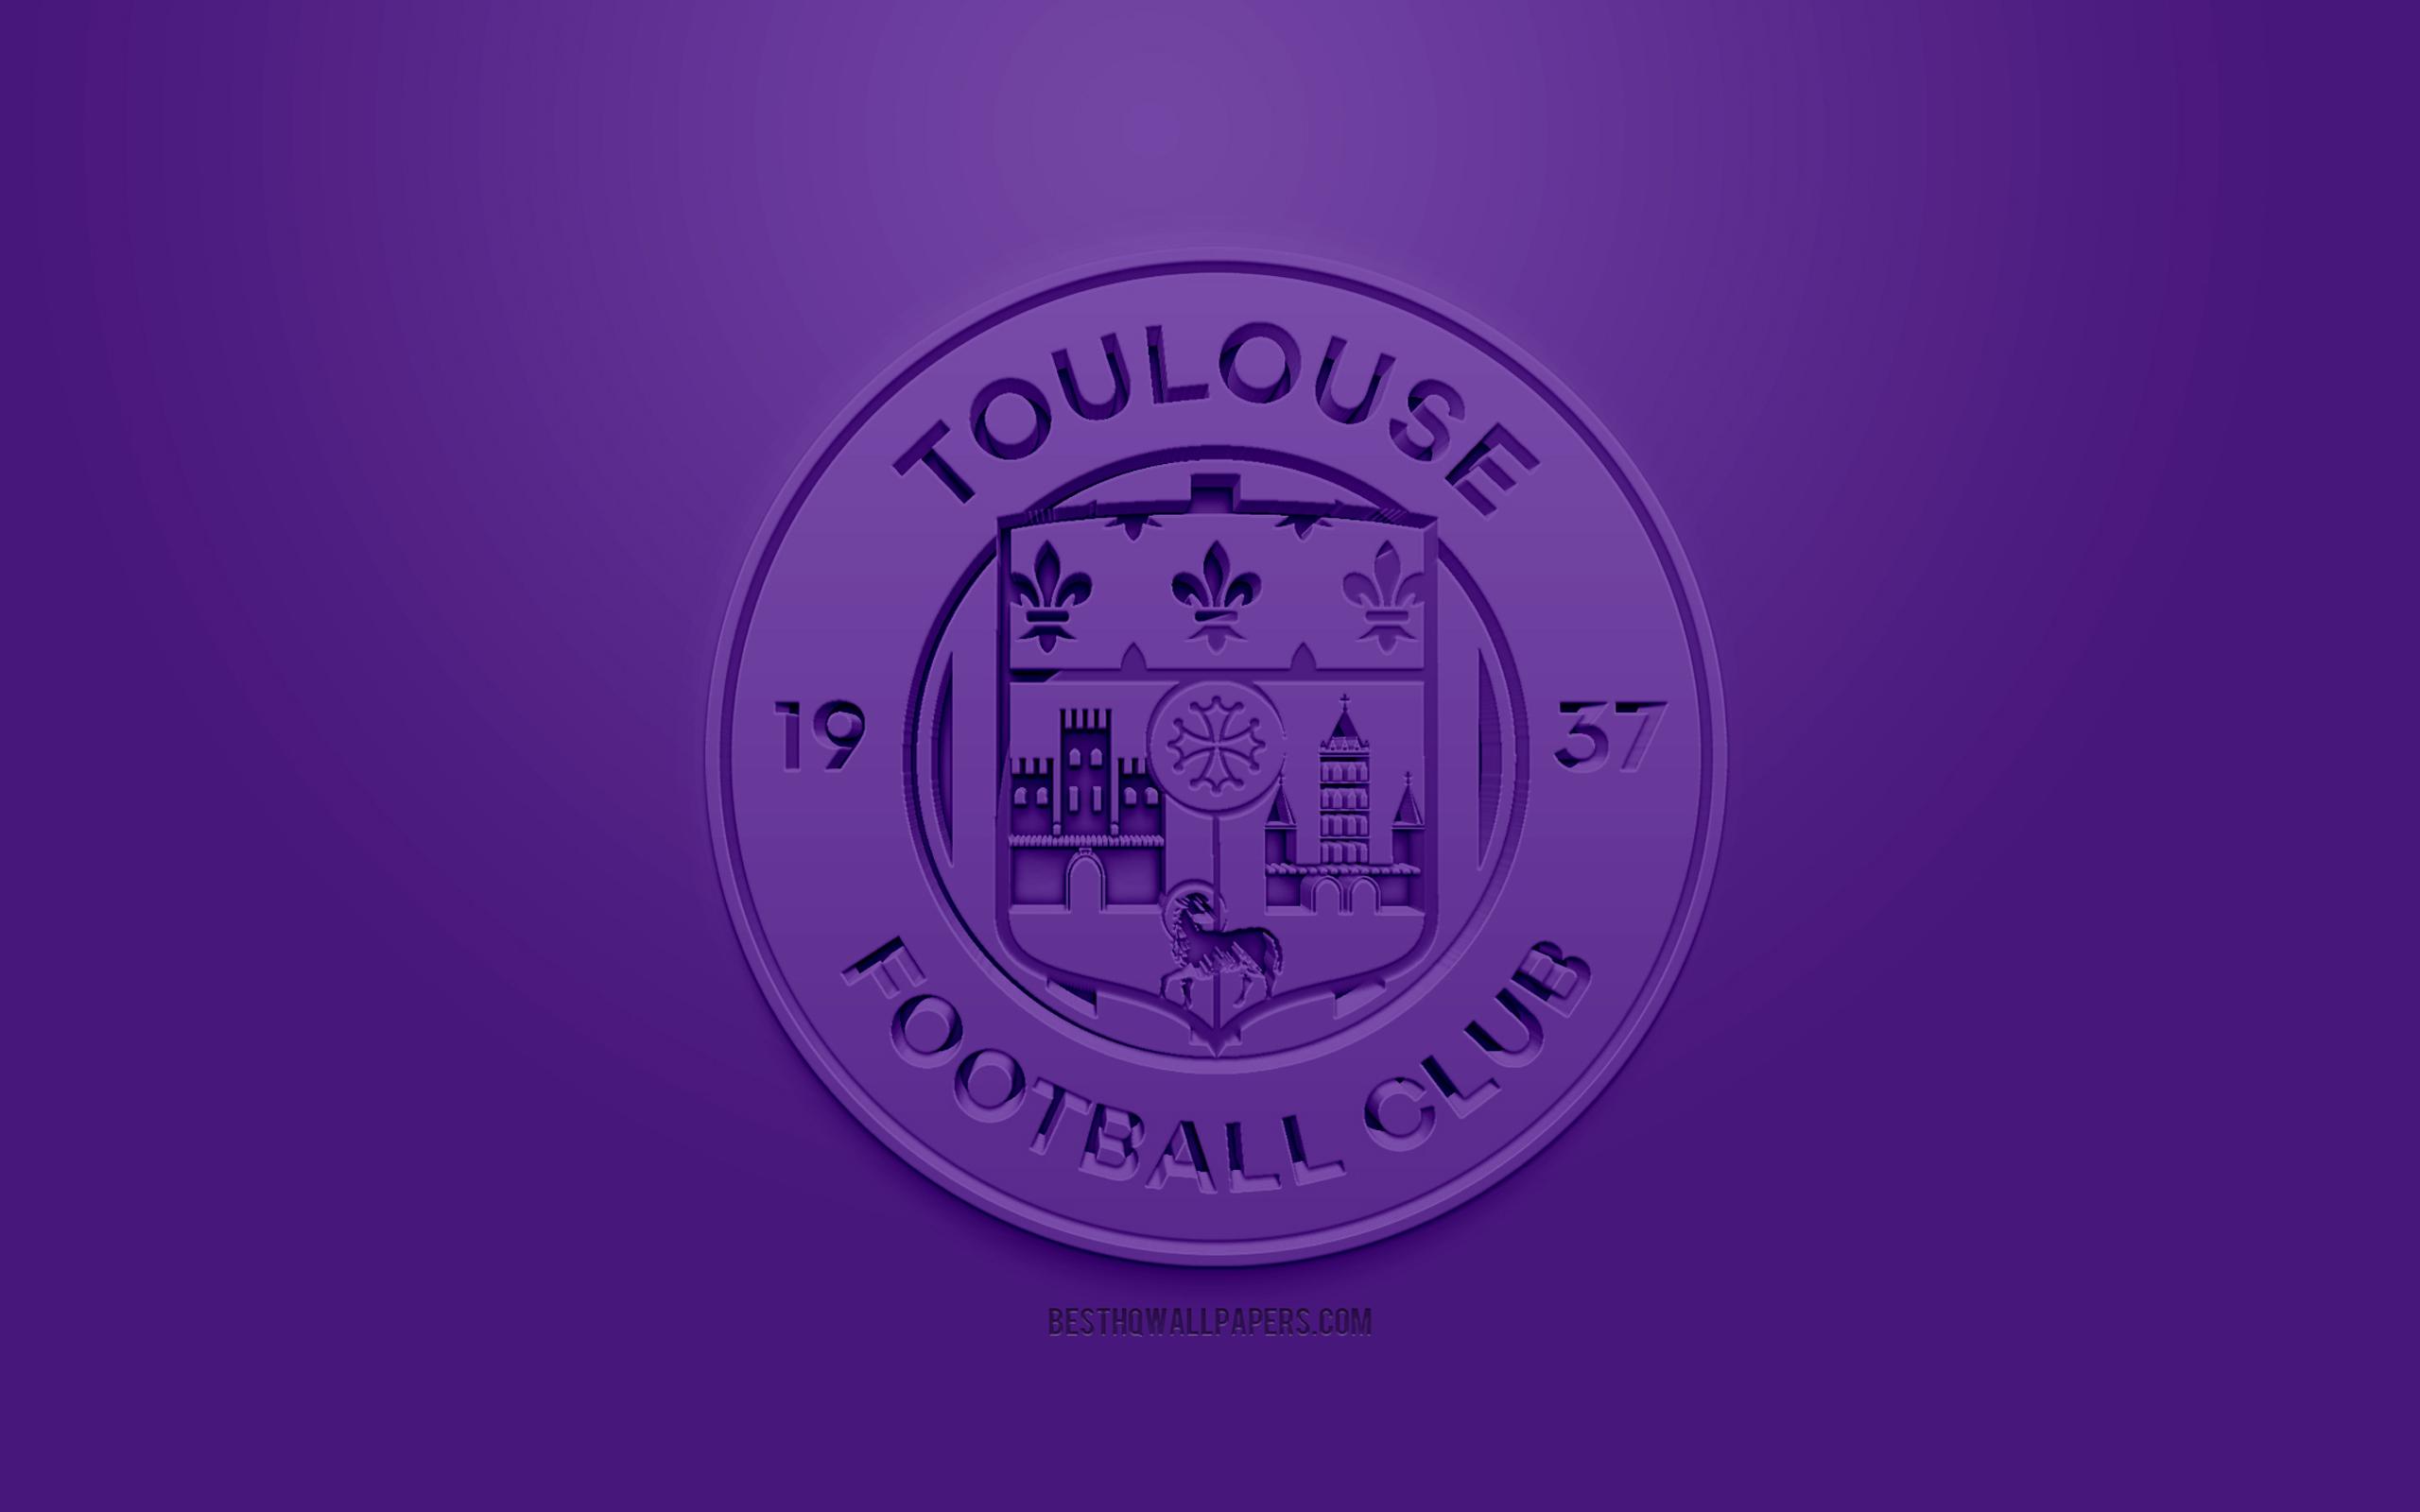 Download wallpaper Toulouse FC, creative 3D logo, purple background